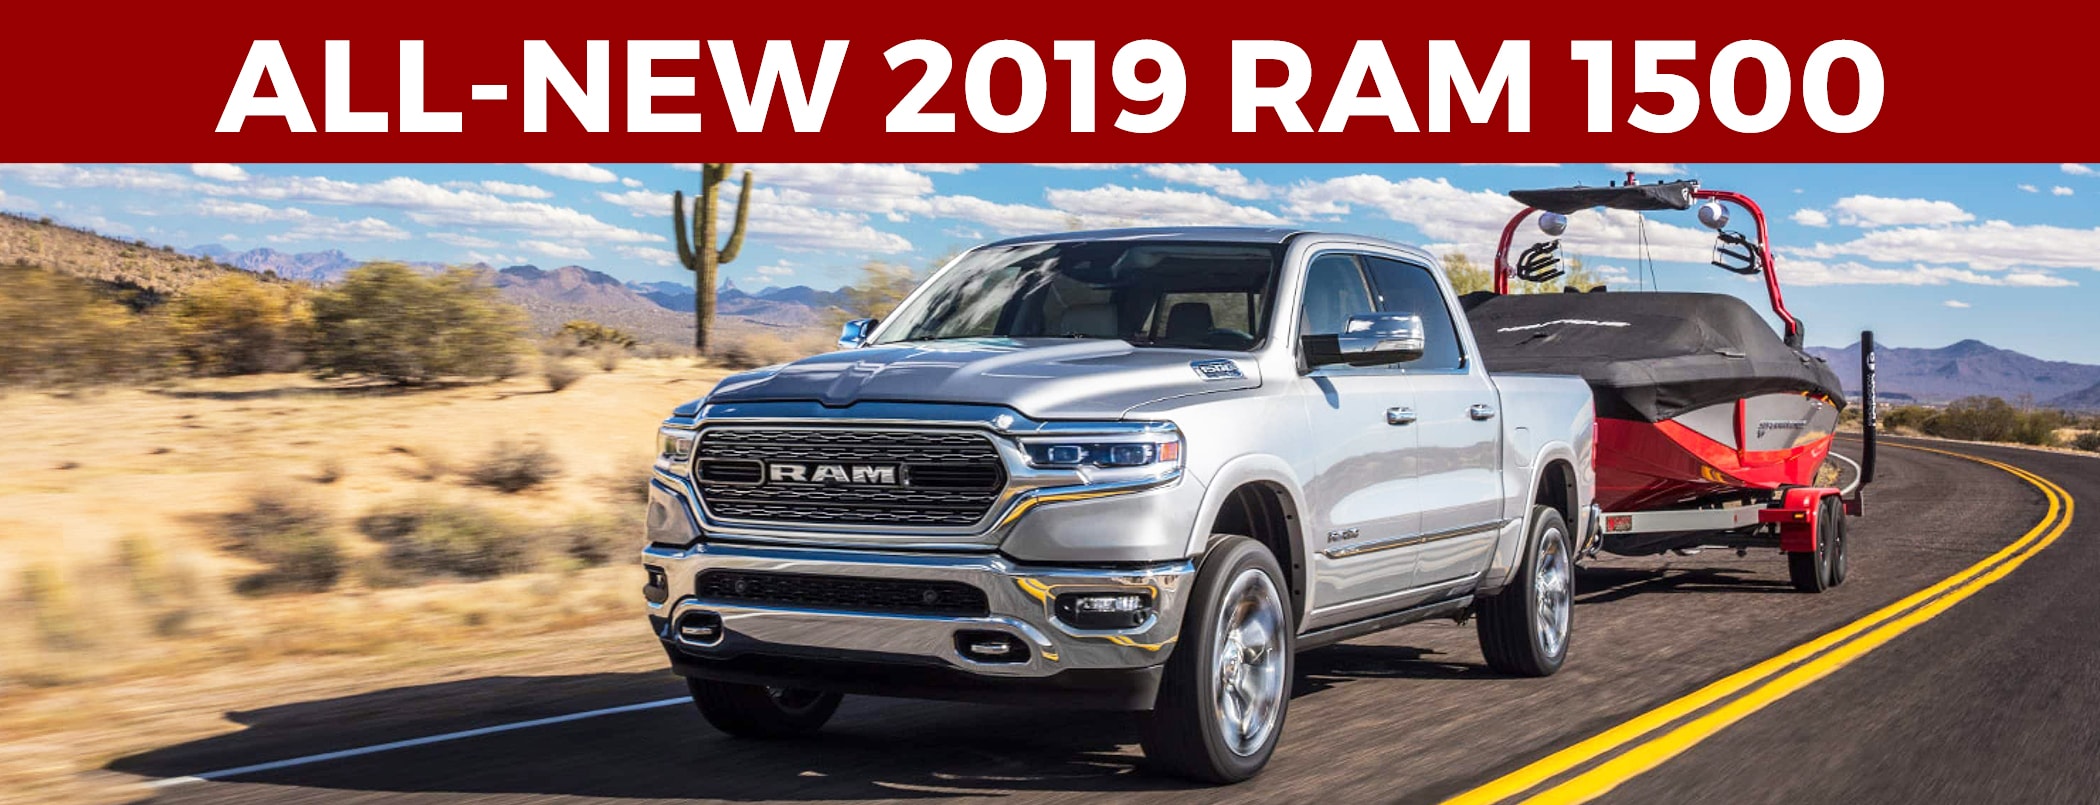 2019 Ram 1500 Review Sandy